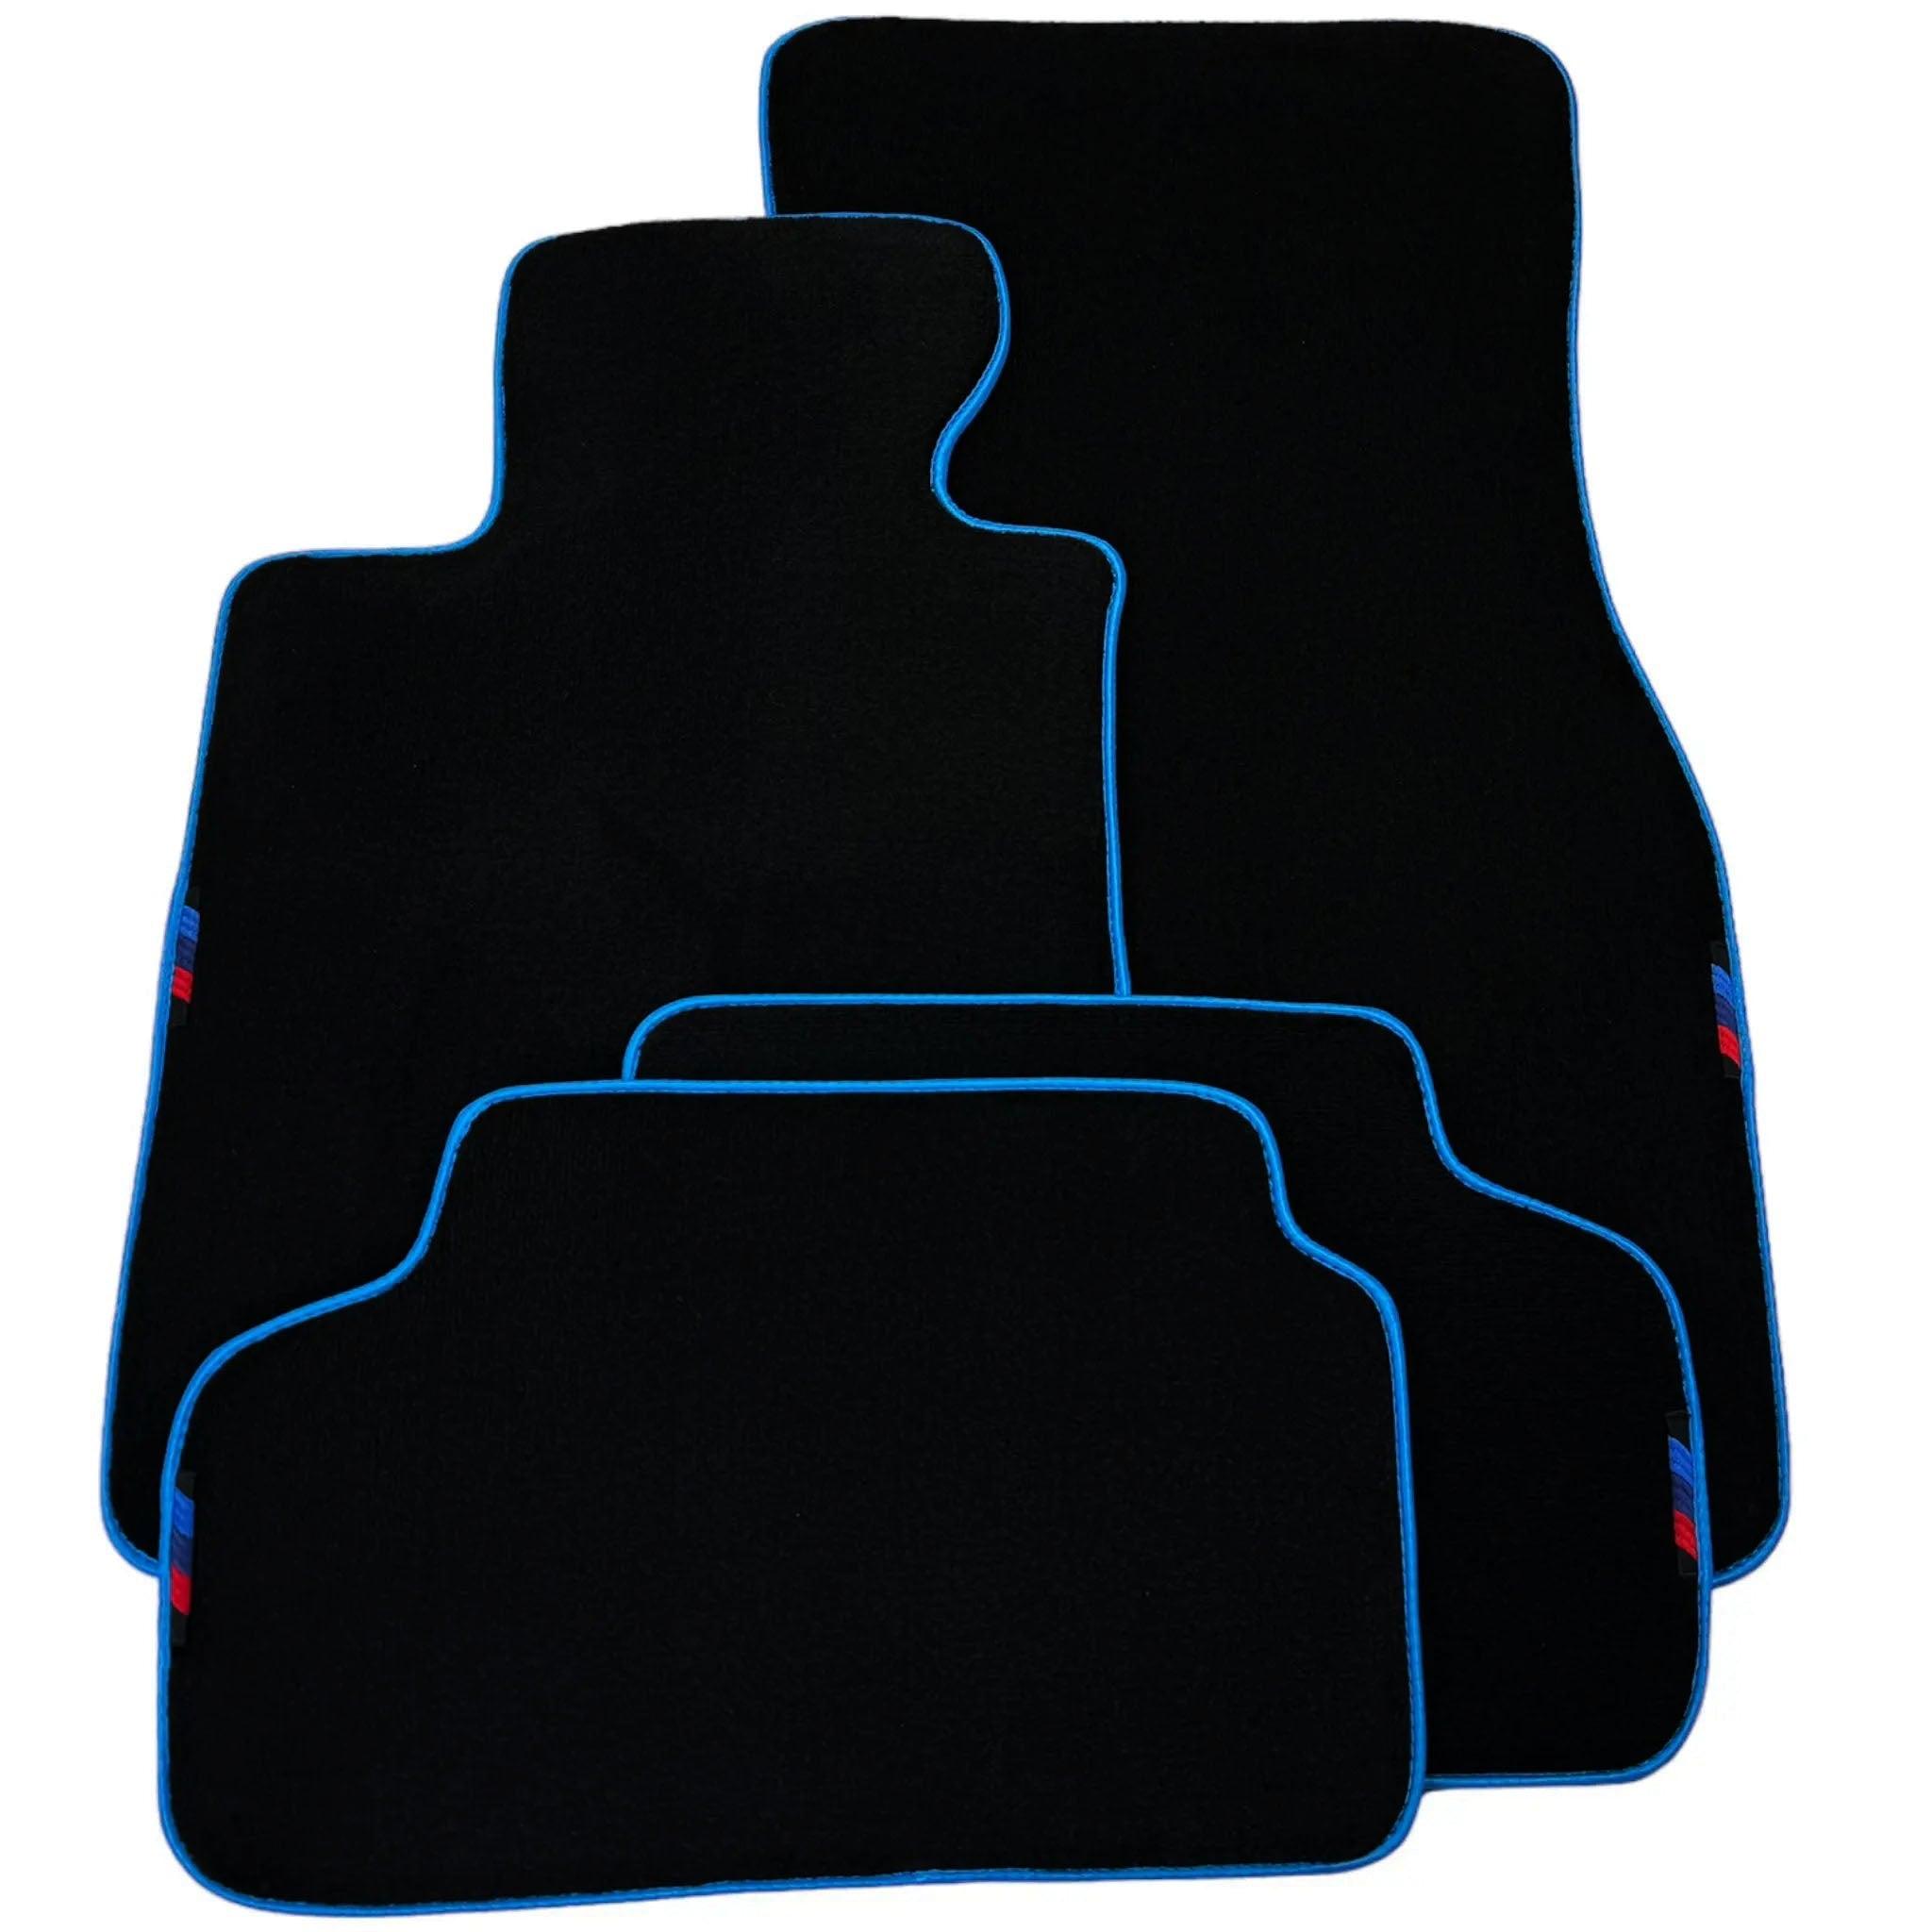 Black Floor Floor Mats For BMW X5 Series E53 | Sky Blue Trim